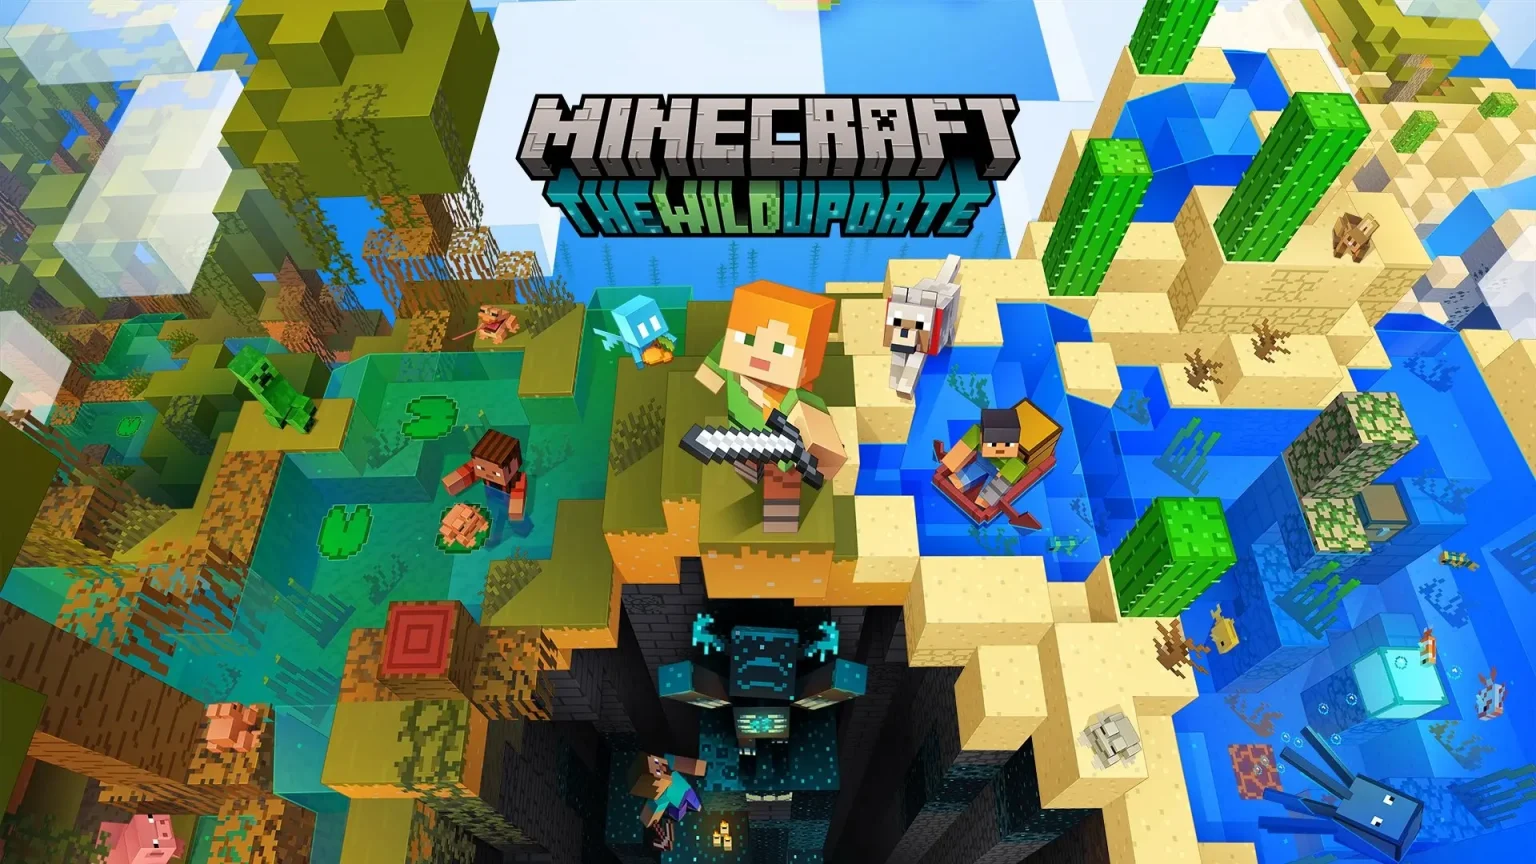 minecraft - the wild - generacion xbox